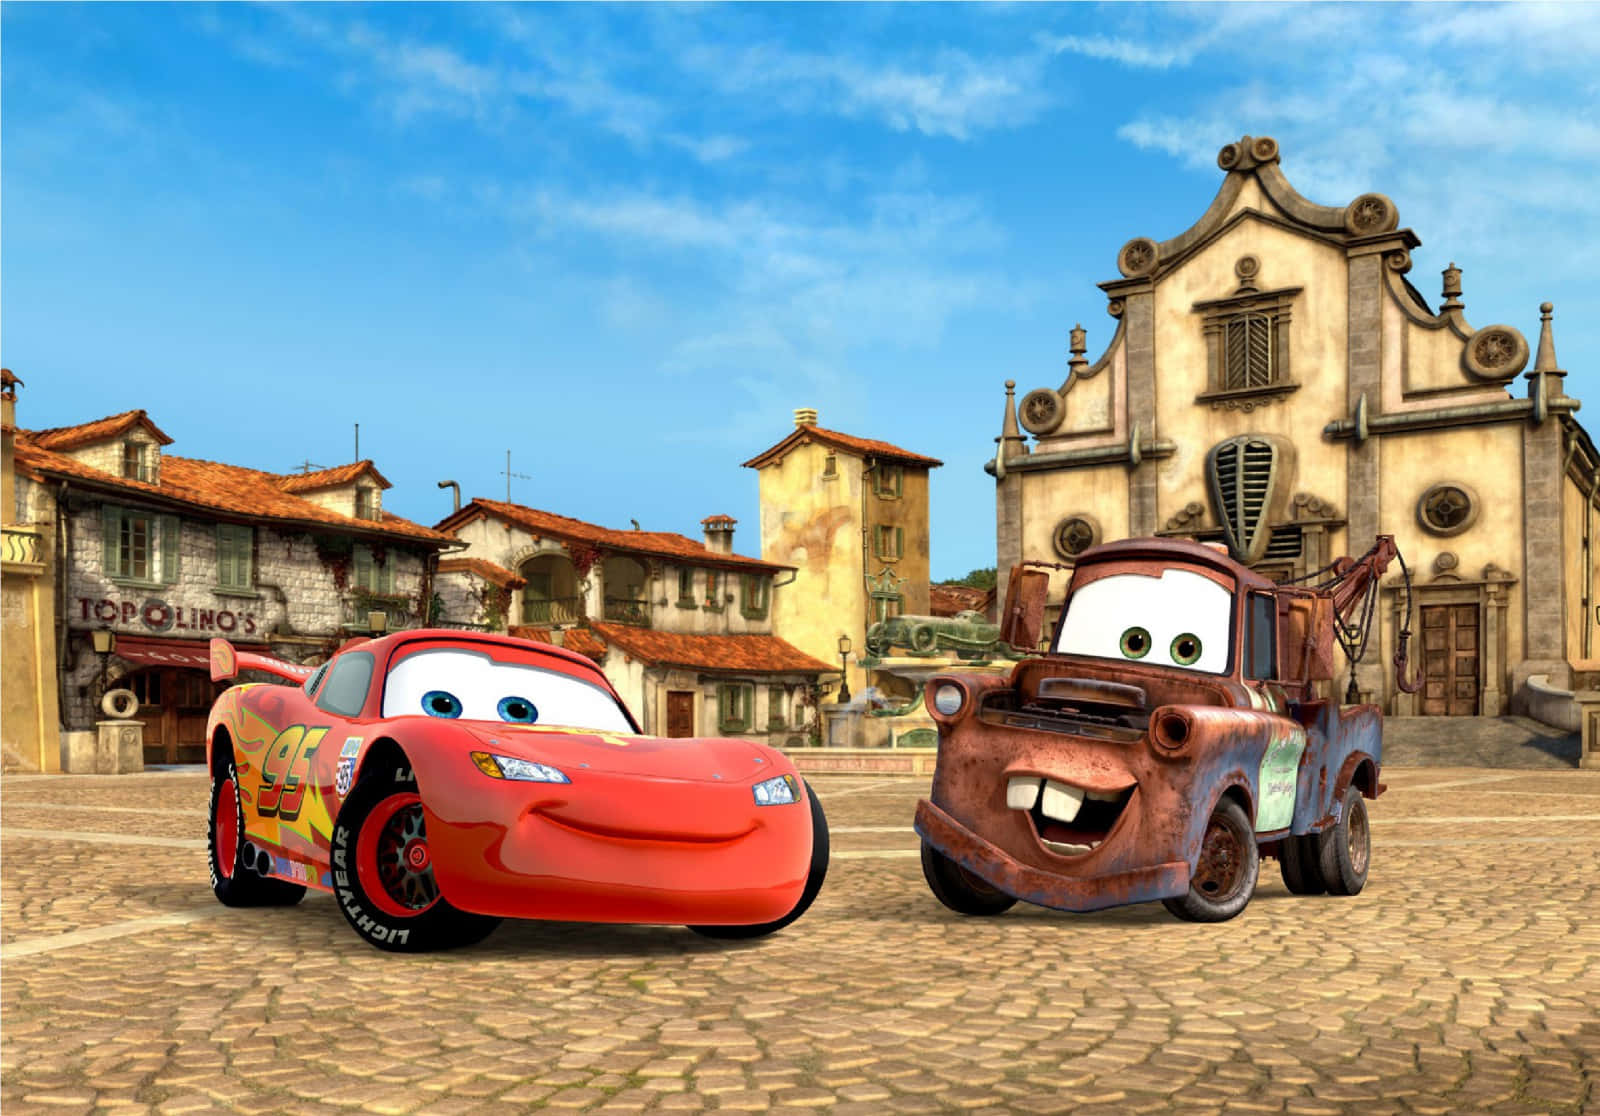 Lightning McQueen and Mater in Radiator Springs